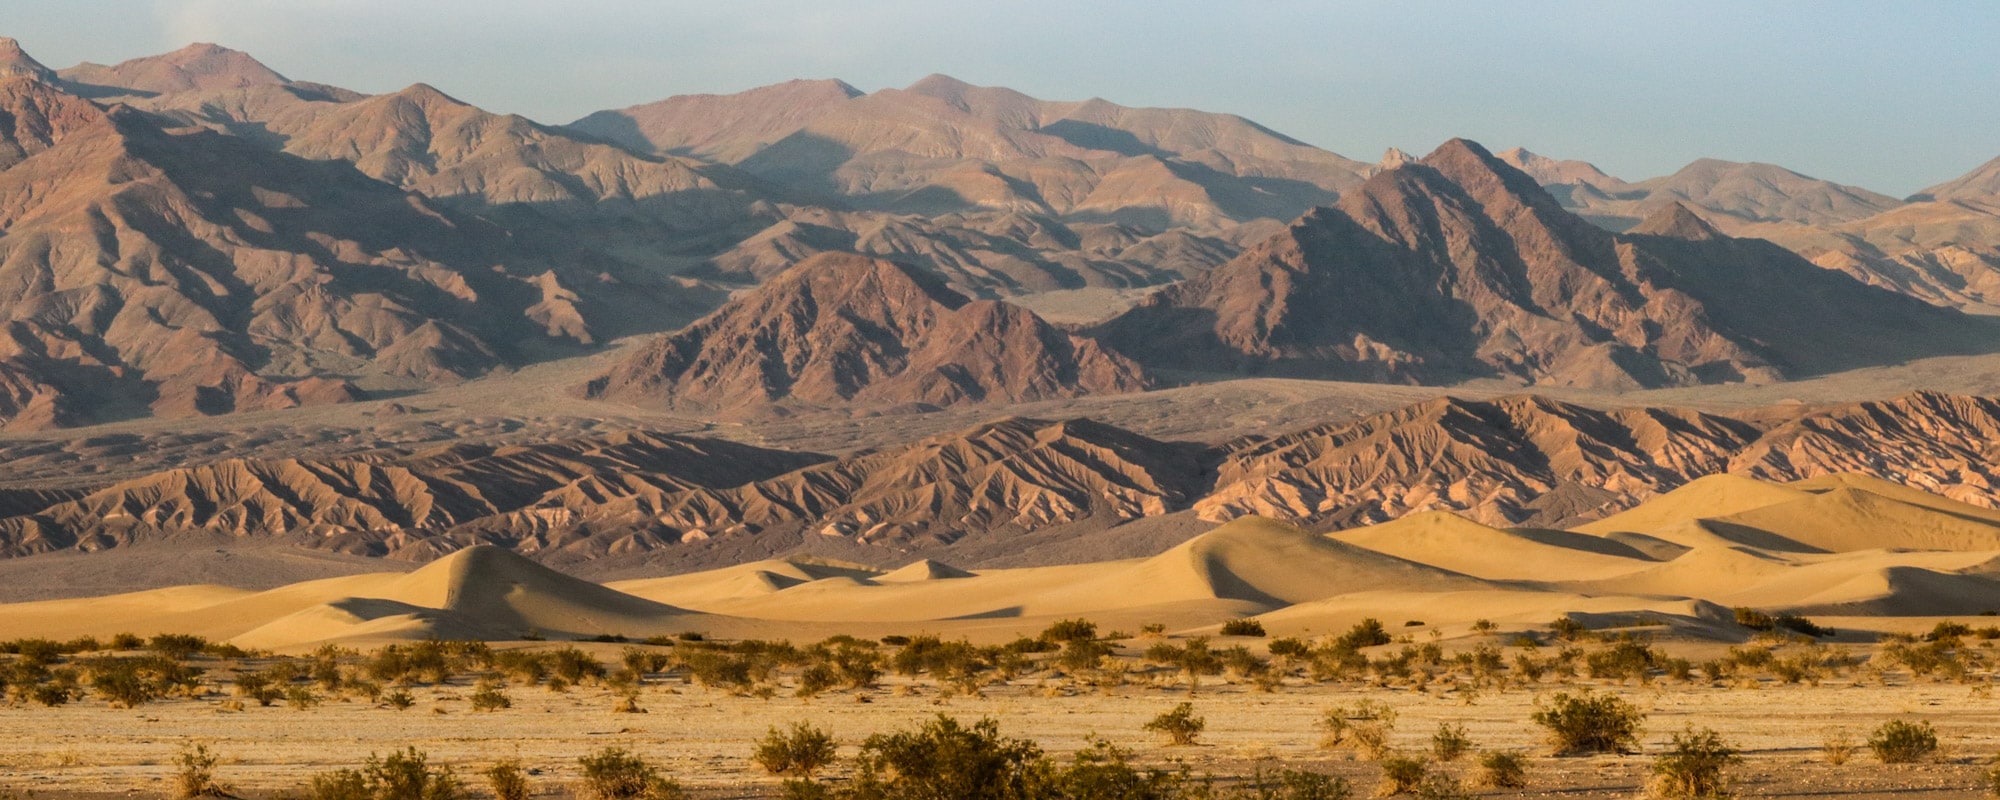 Death Valley National Park - Banner Mesquite Flat Sand Dunes